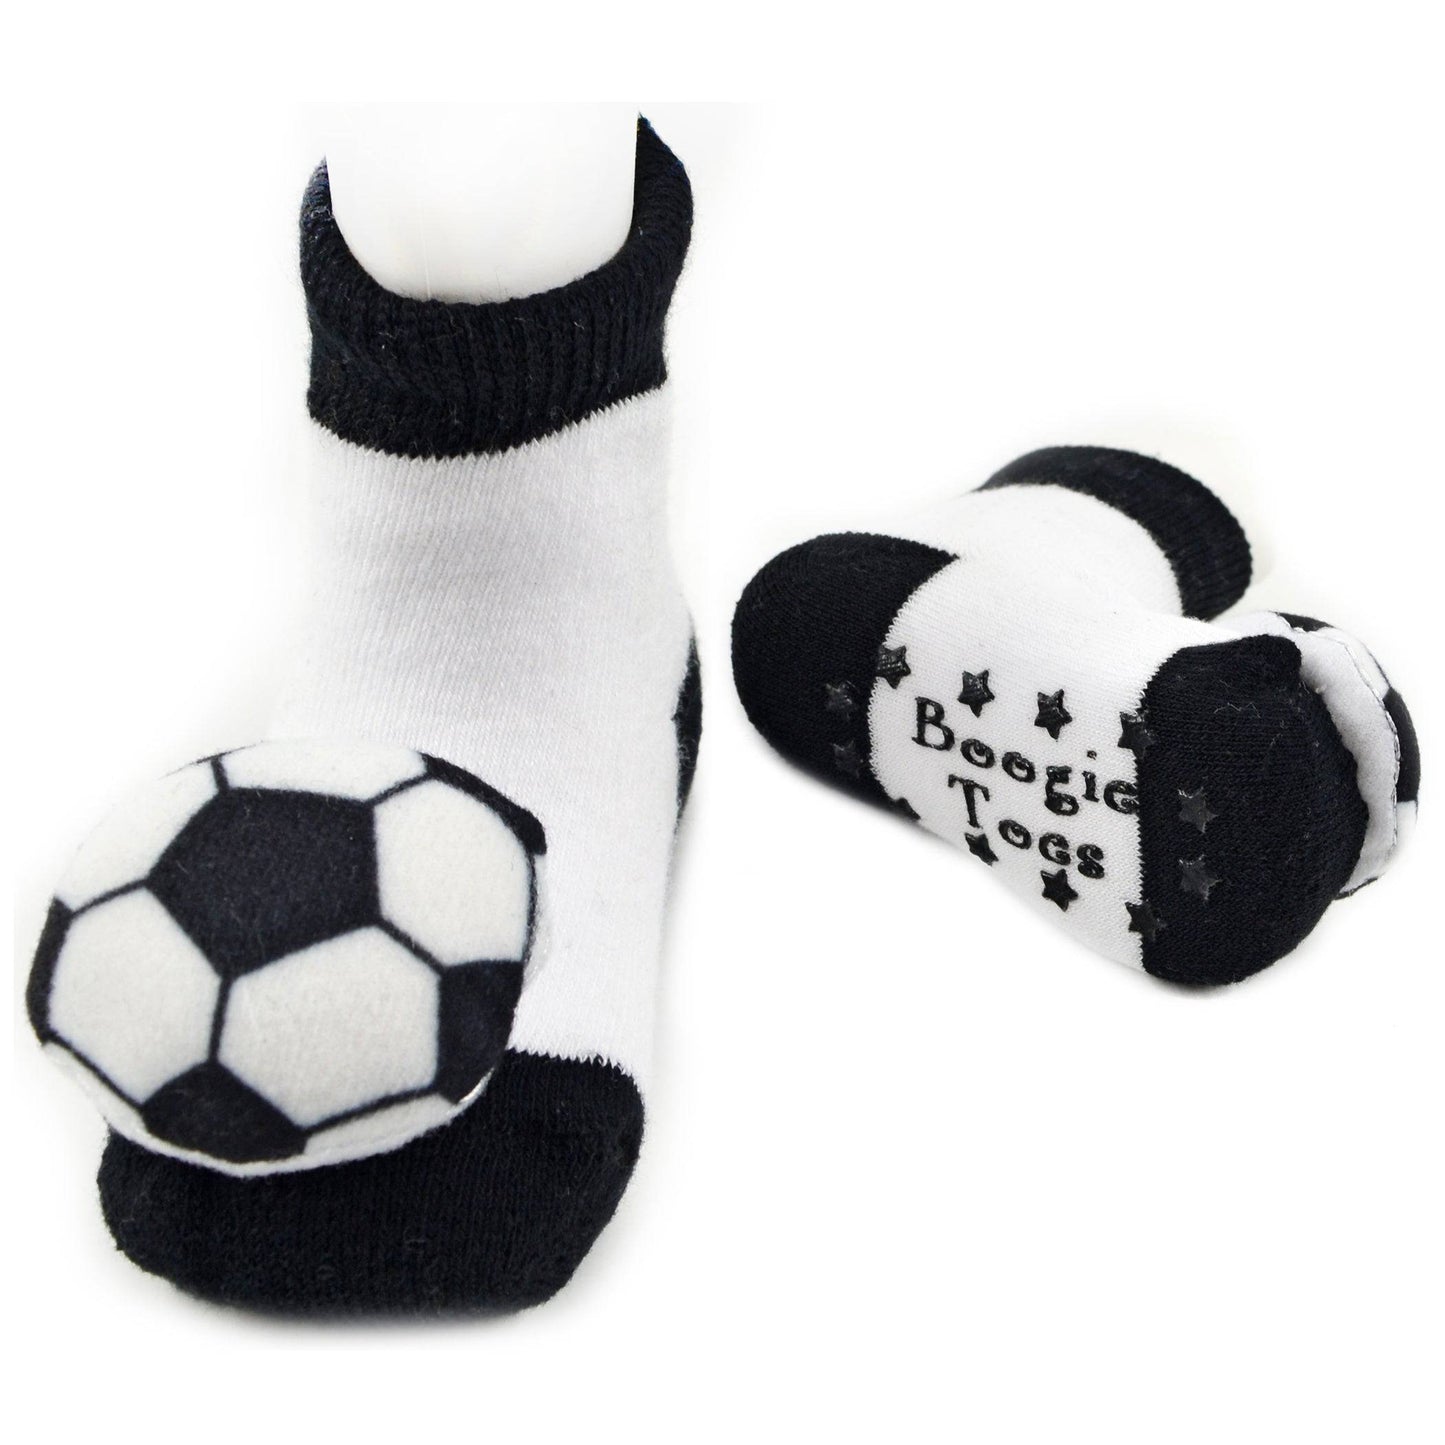 Boogie Toes -Soccer Rattle Socks